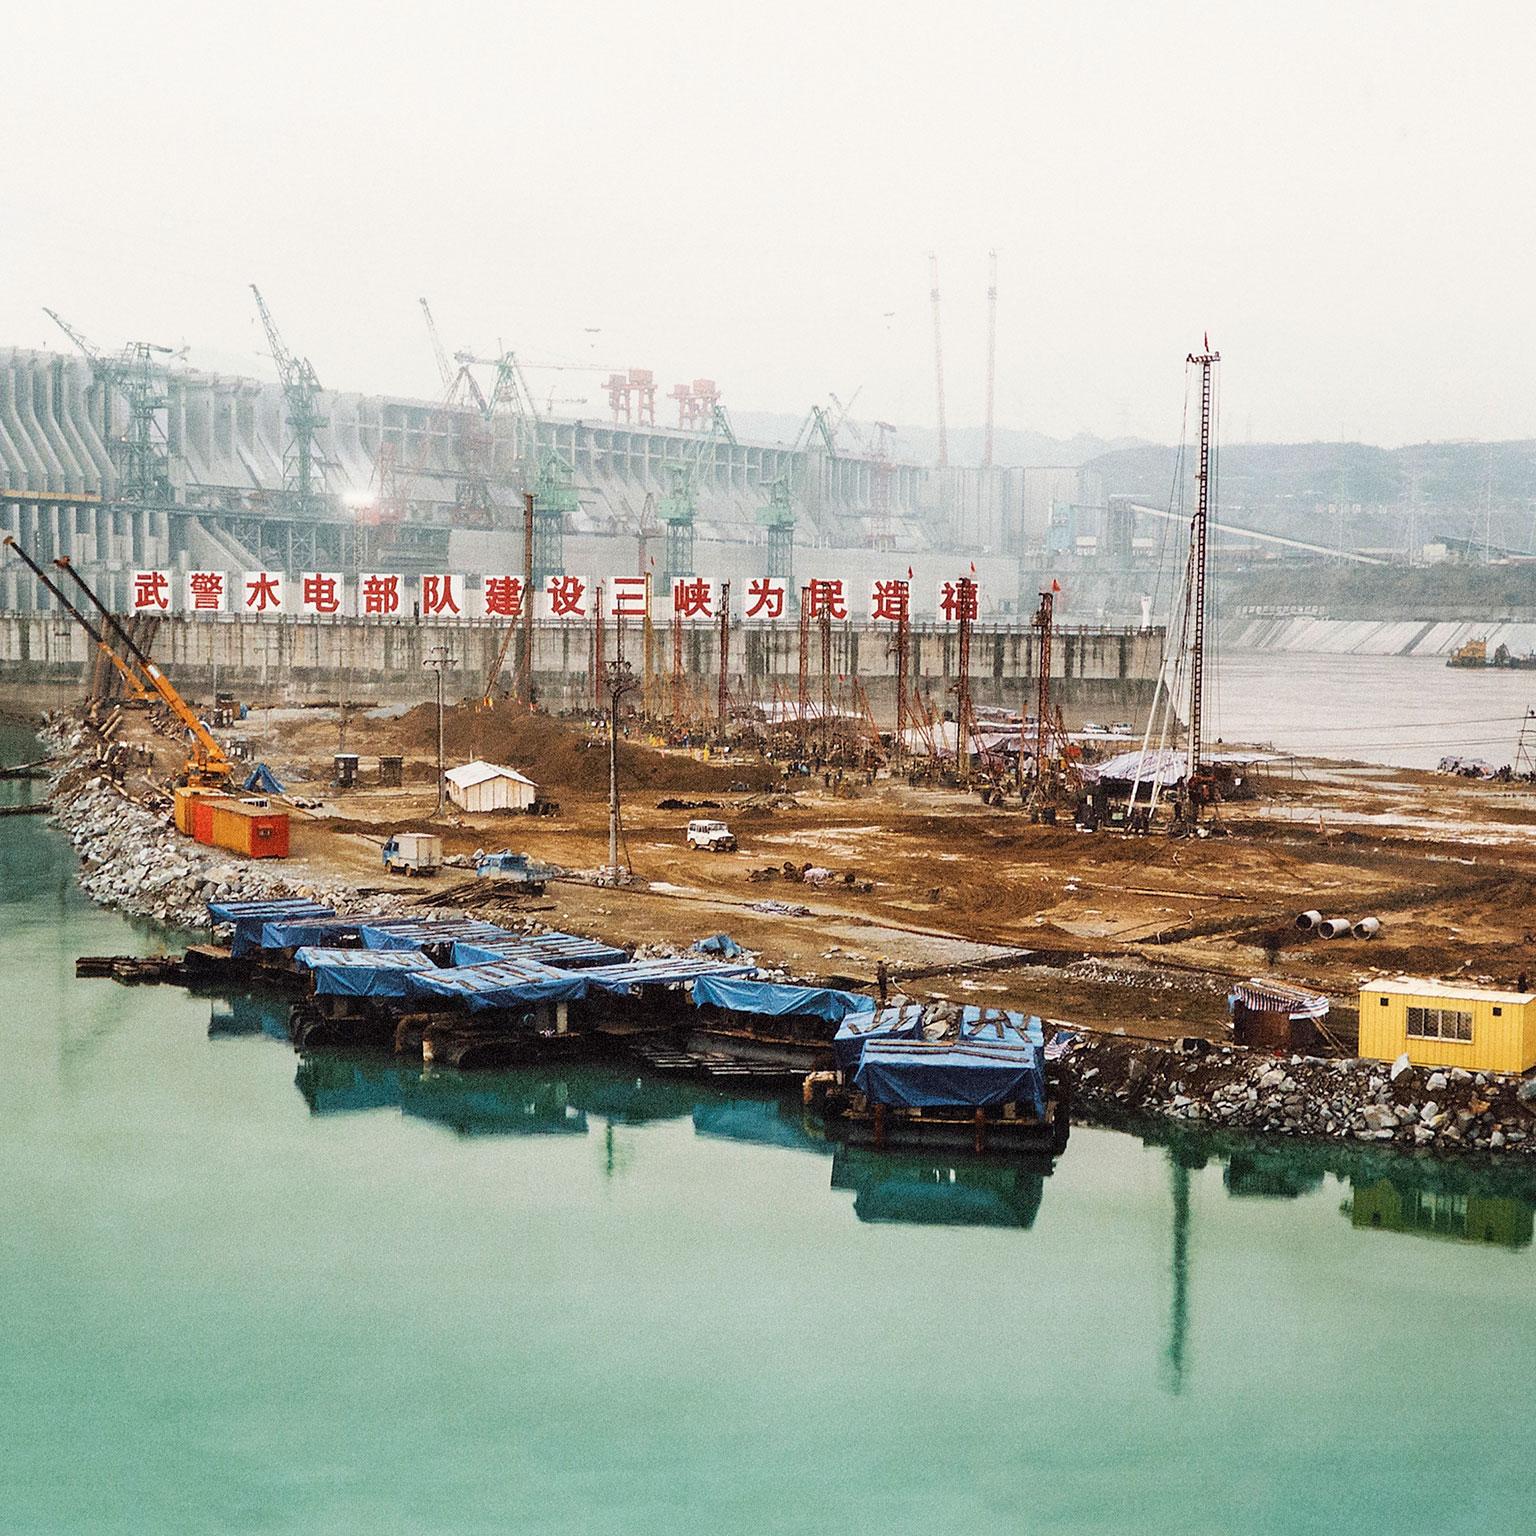 Dam #1, Yengtze River, China - Contemporary Photograph by Edward Burtynsky